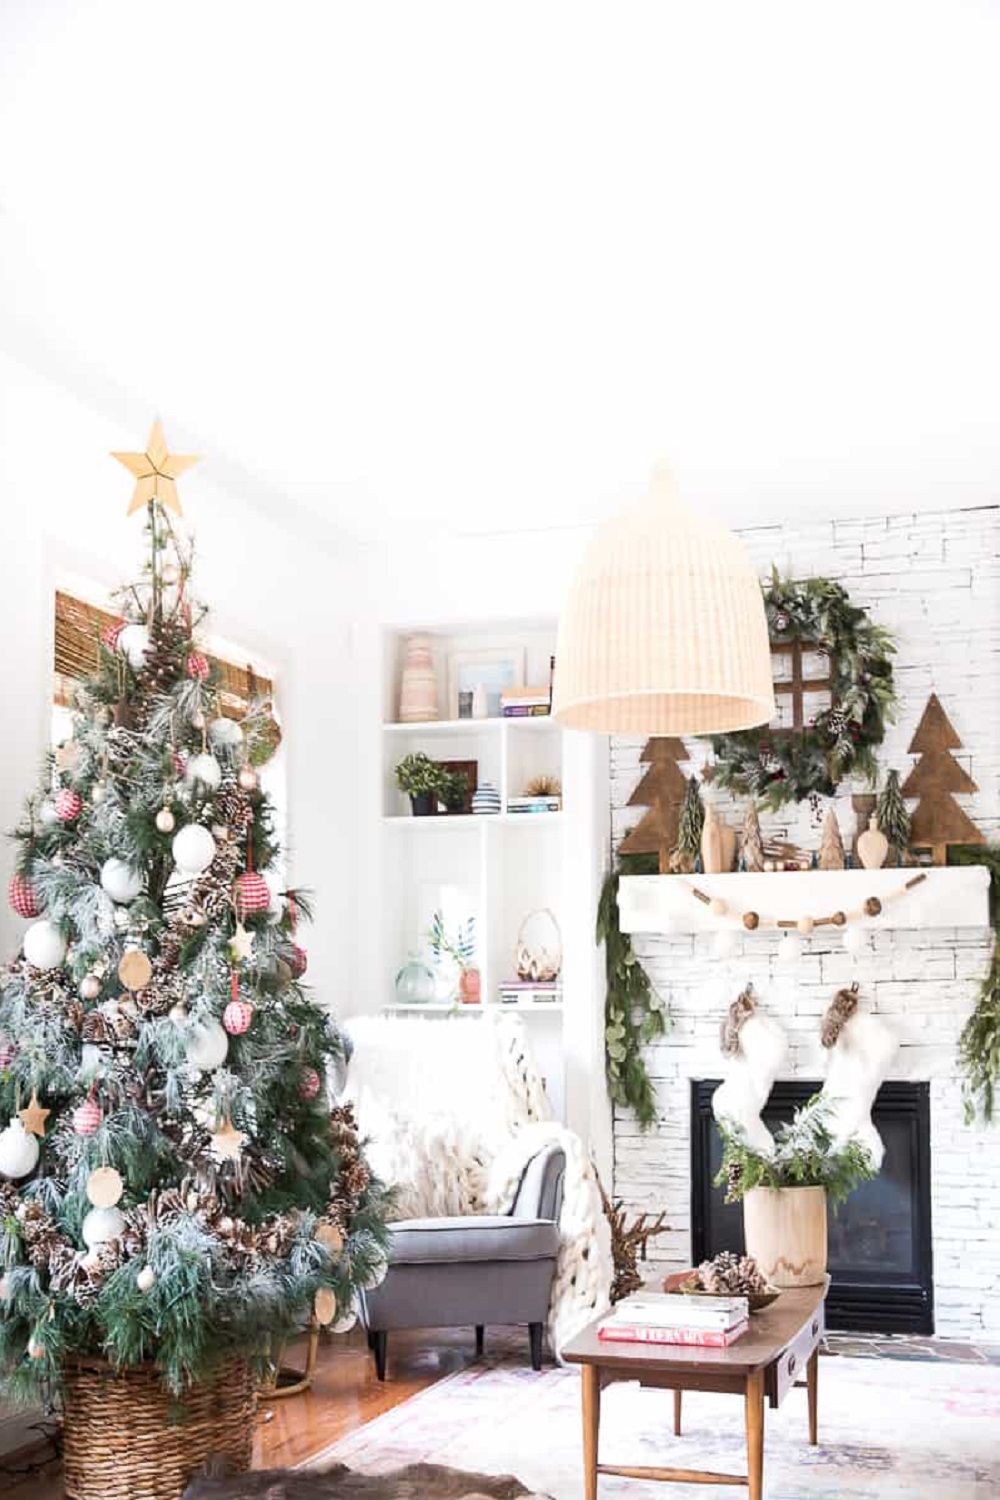 30 Best Rustic Christmas Tree Ideas